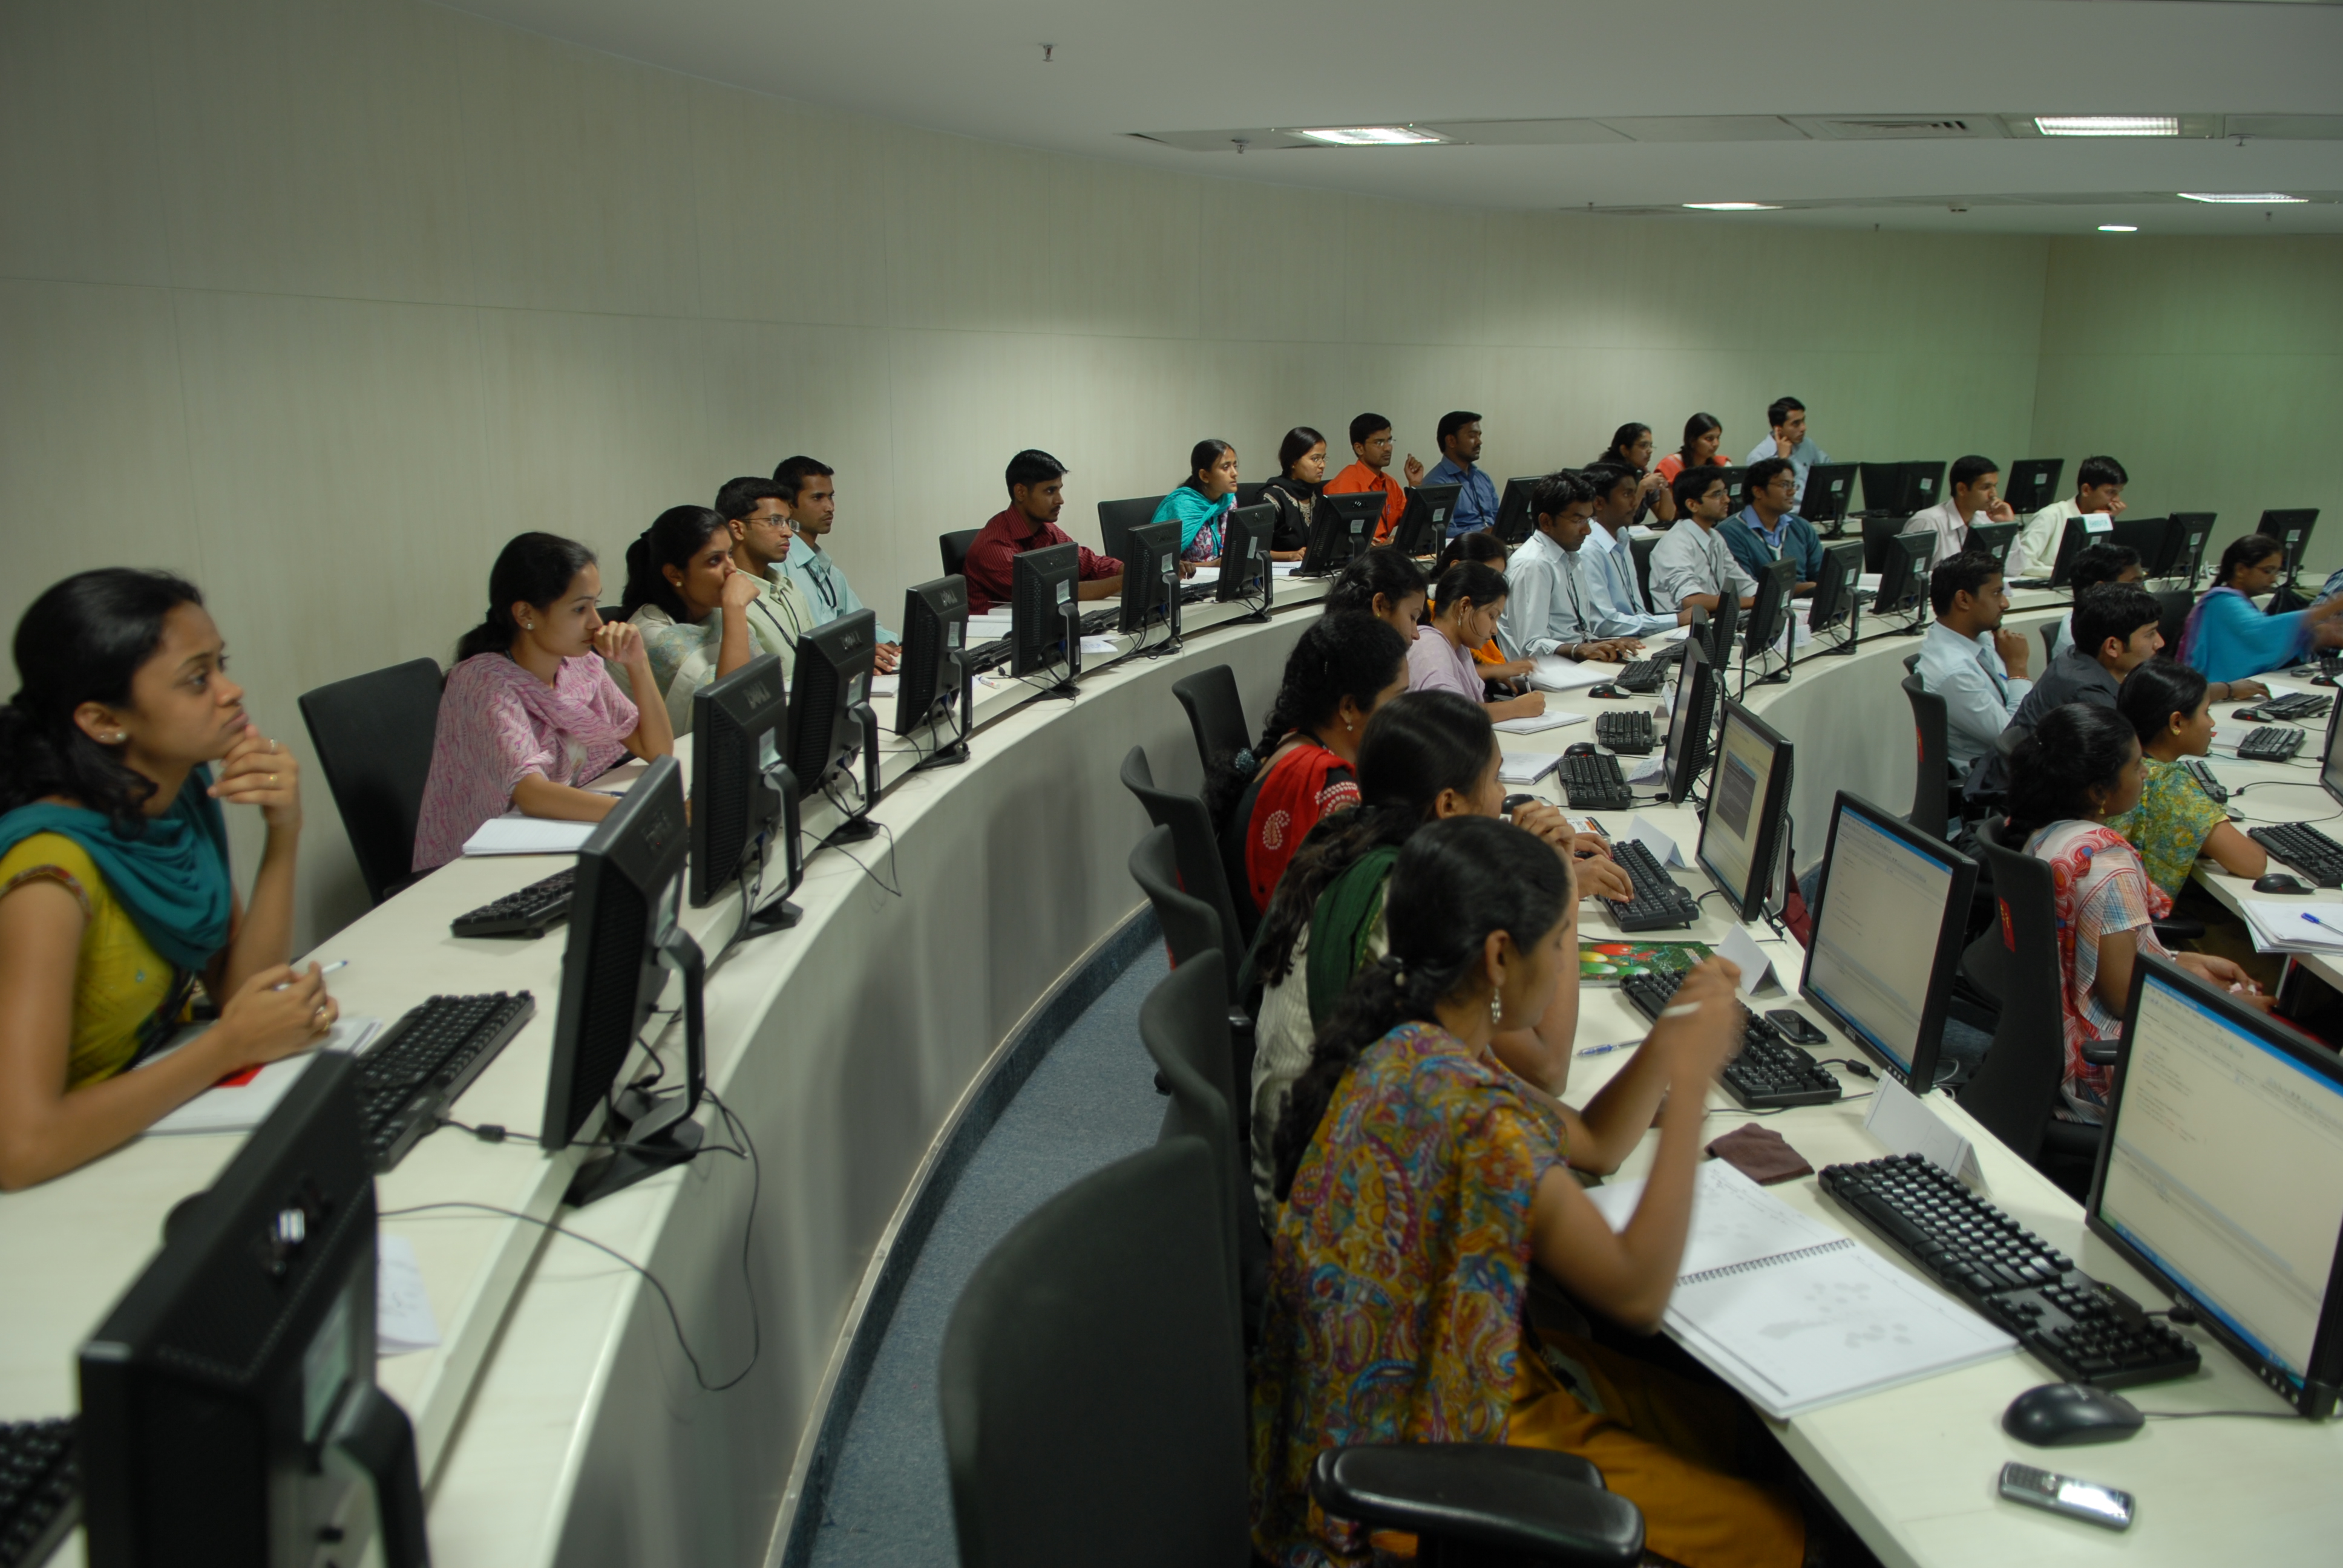 Facebook backs Indian education startup Unacademy | TechCrunch